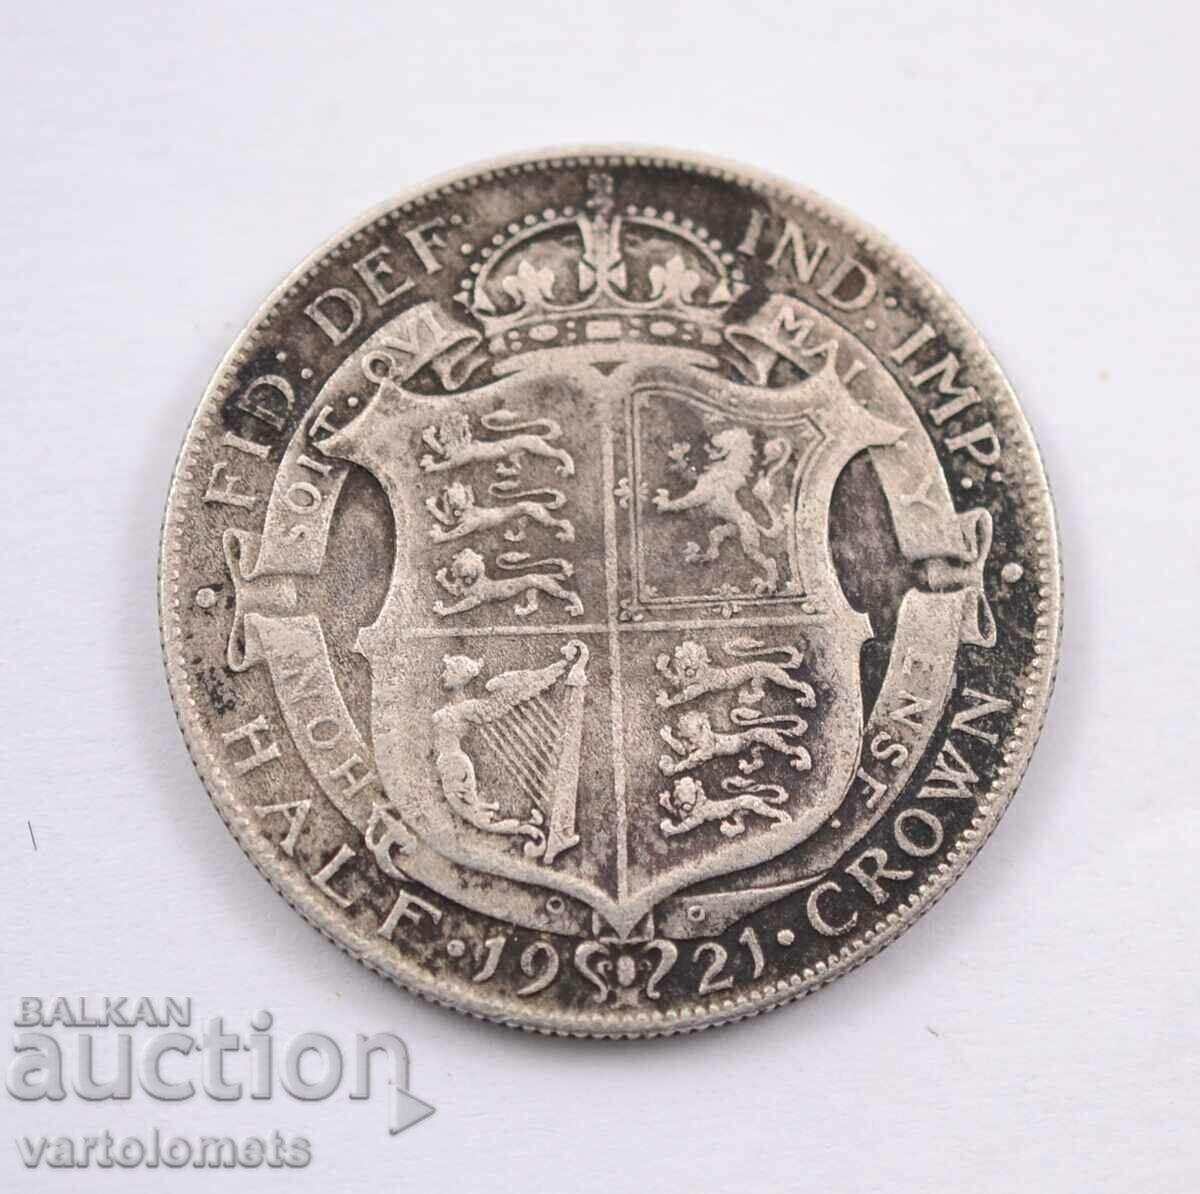 ½ crown, 1921 United Kingdom › King George V, silver